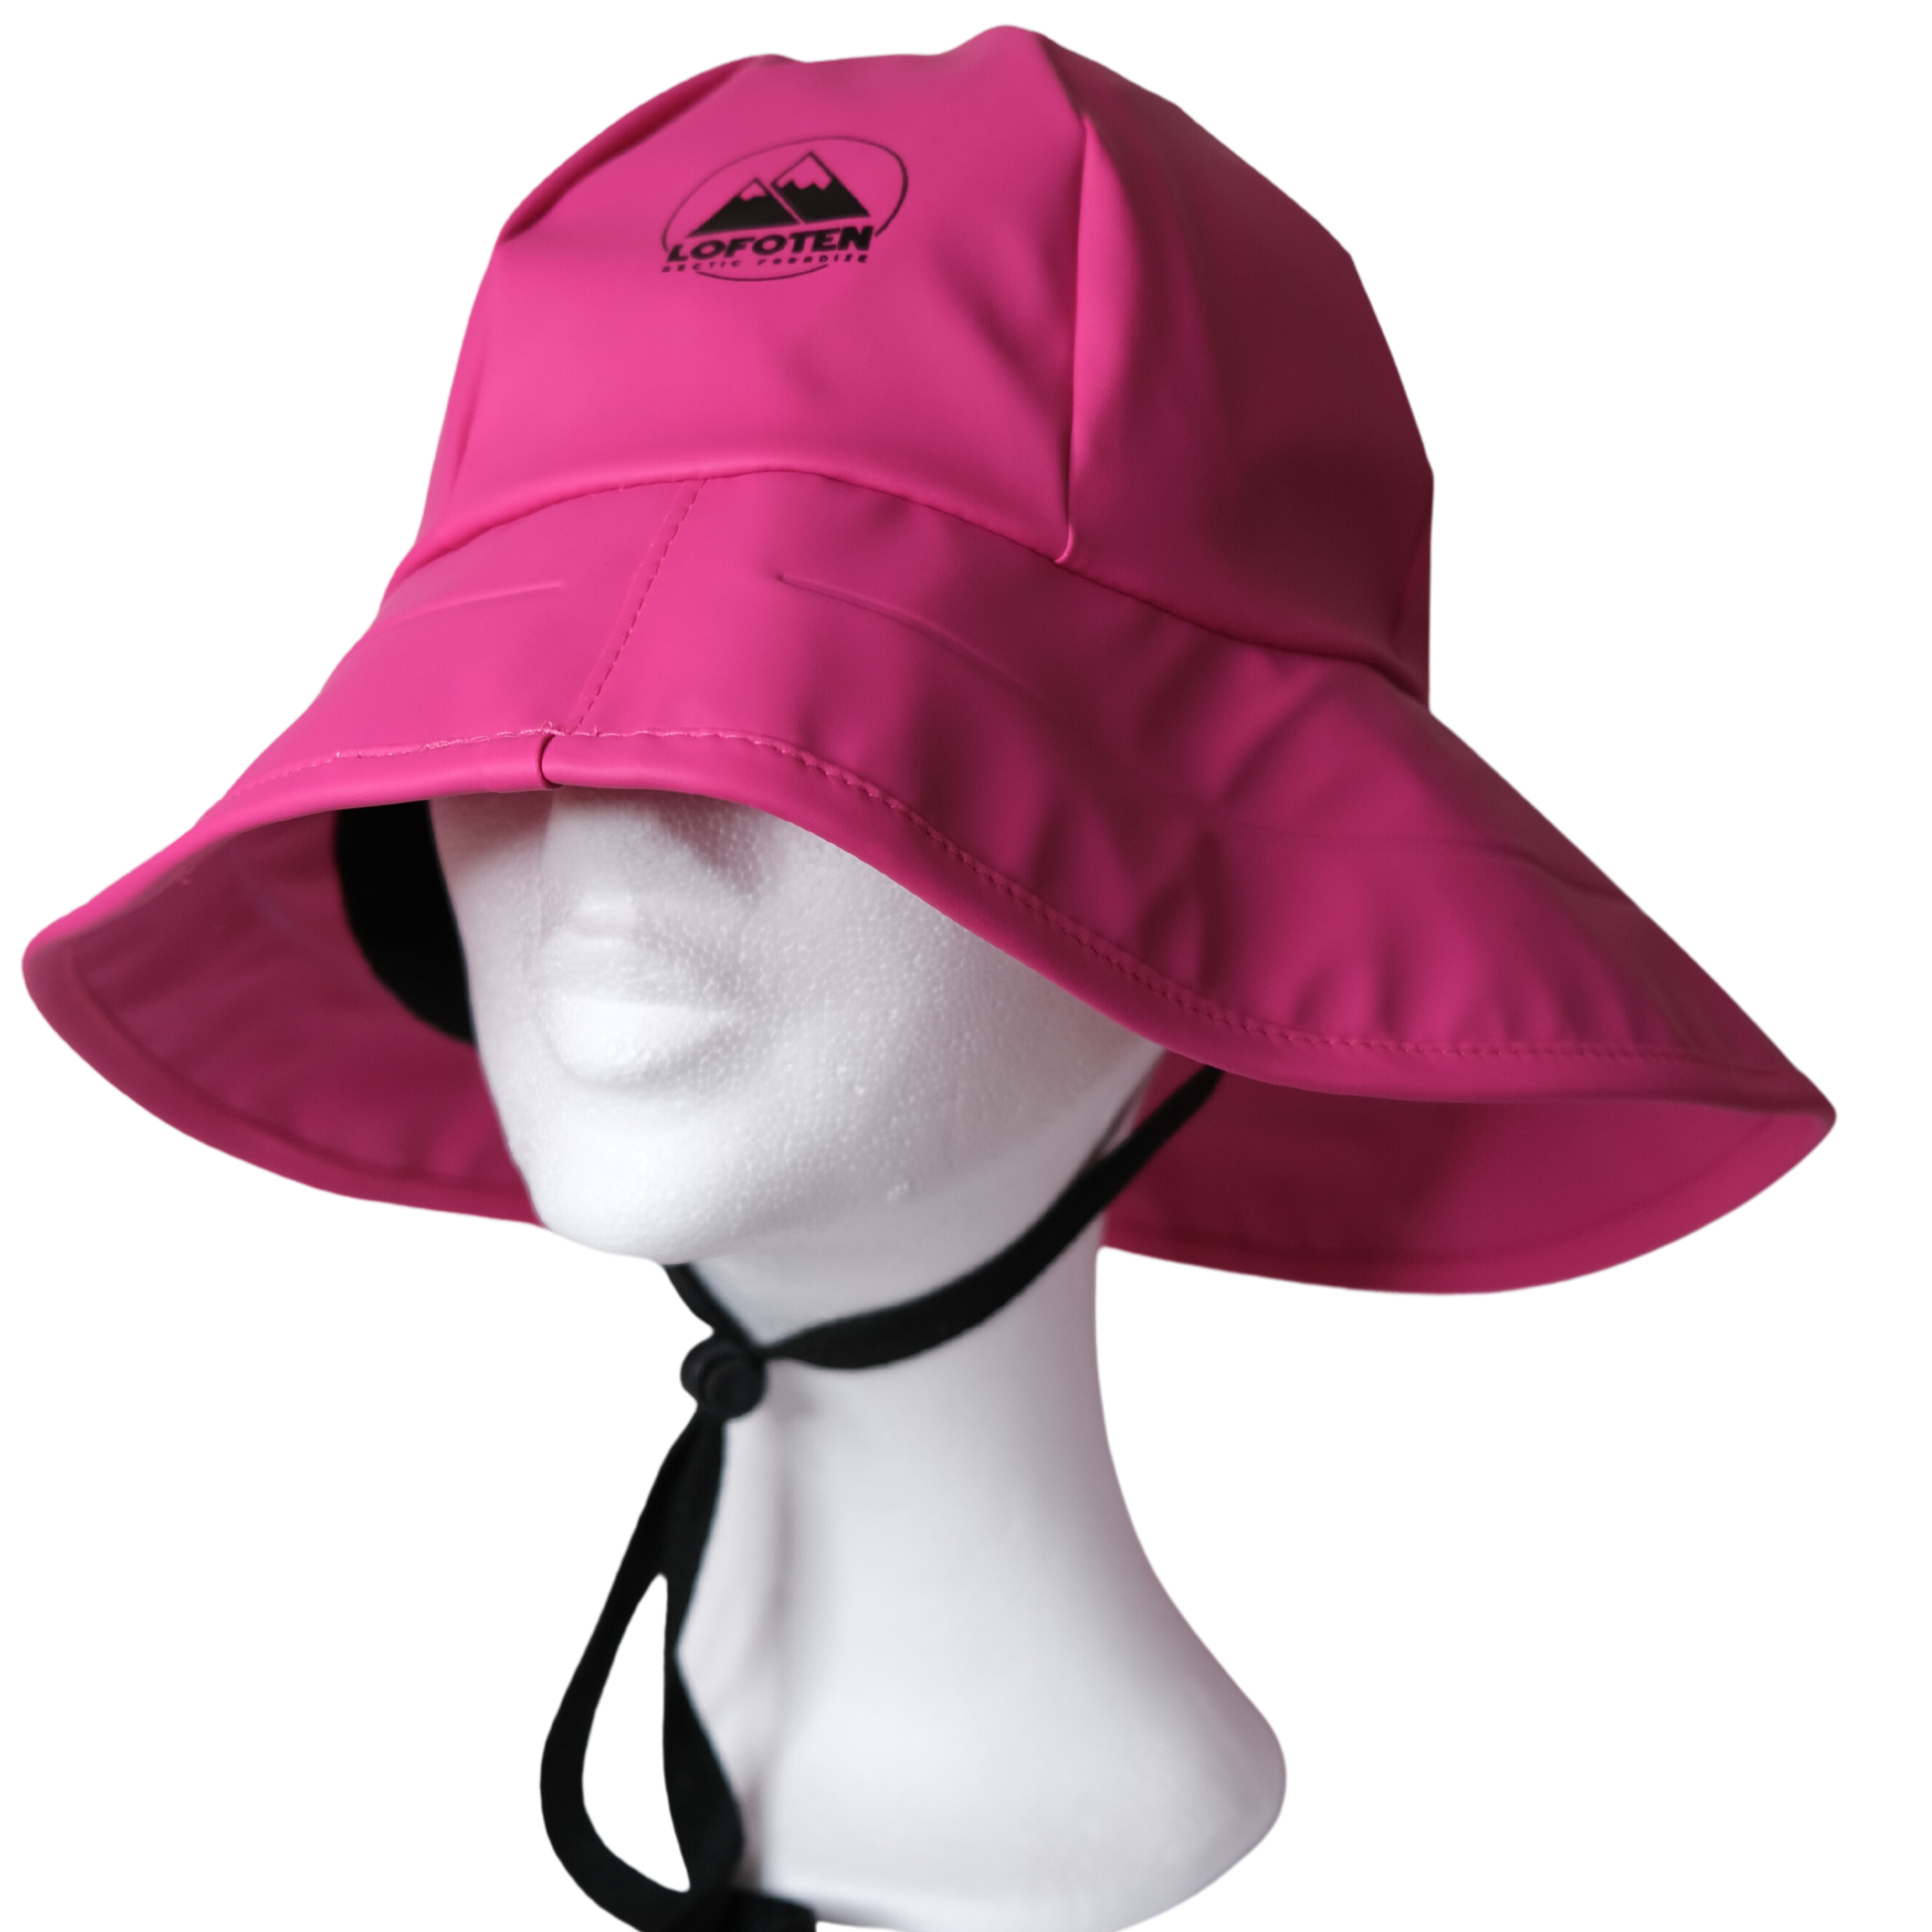 Pink sydvest / rain hat from Lofoten